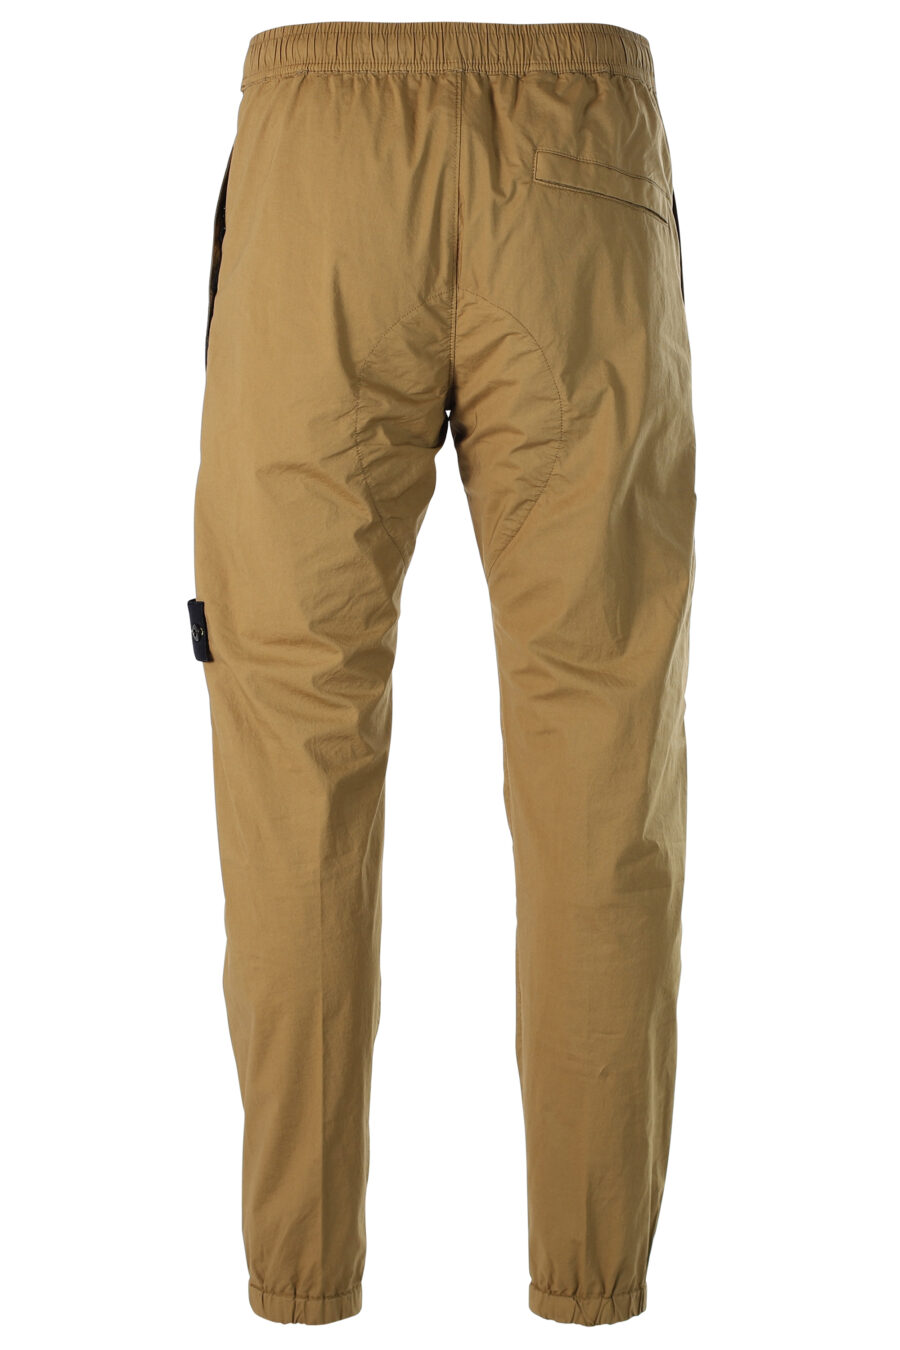 Pantalon cargo kaki avec patch - 8052572550010 3